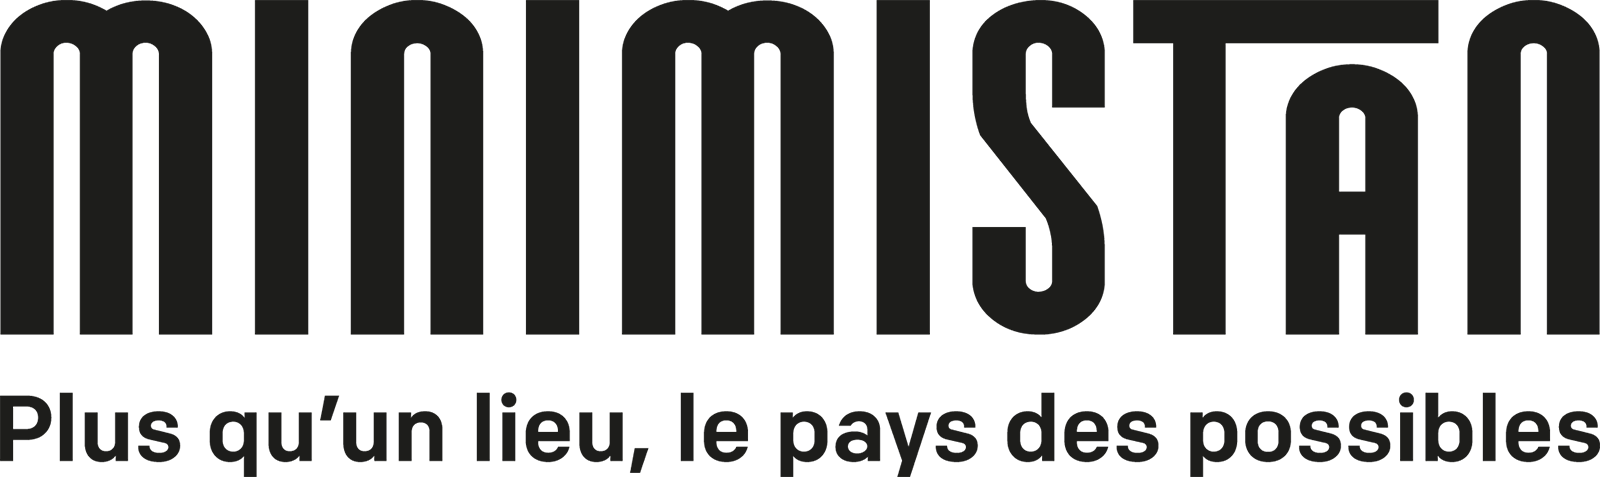 Logo Minimistan